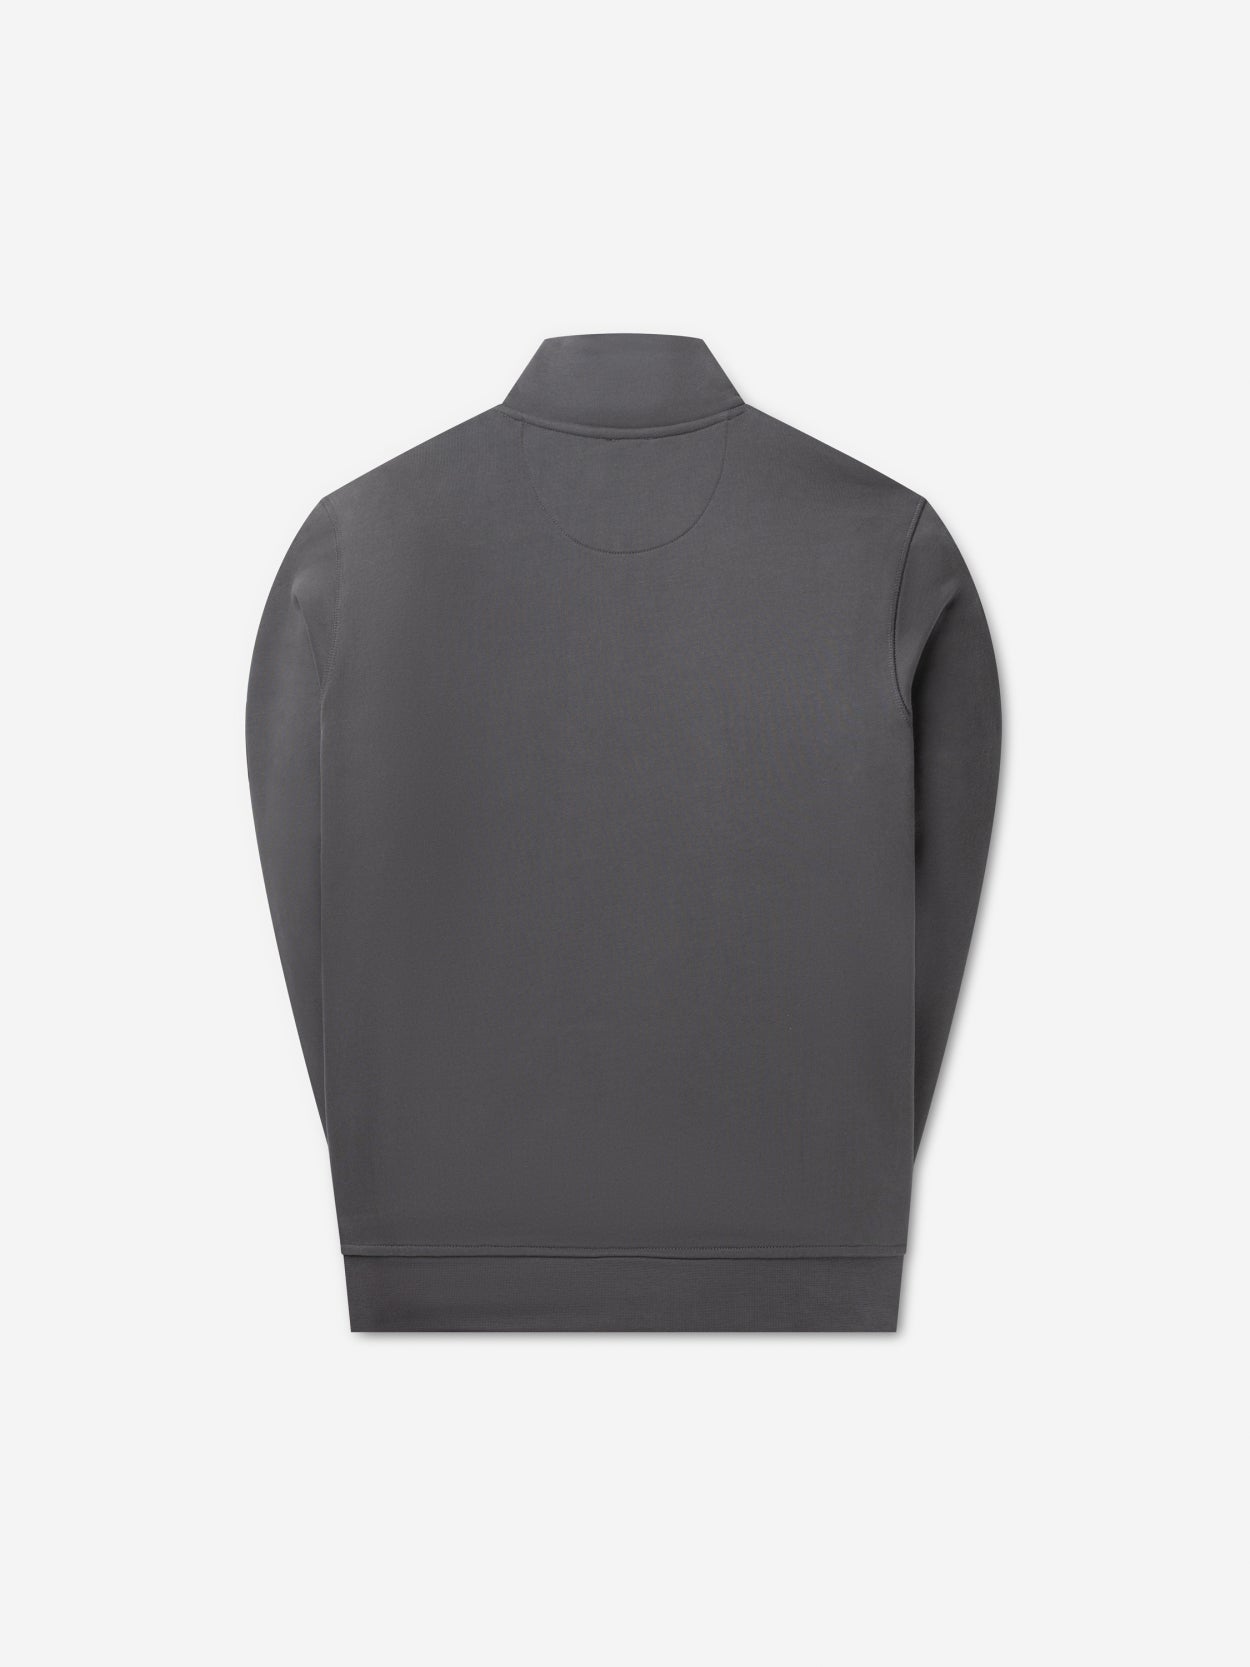 Metal Half-Zip Sweater | Forged Iron